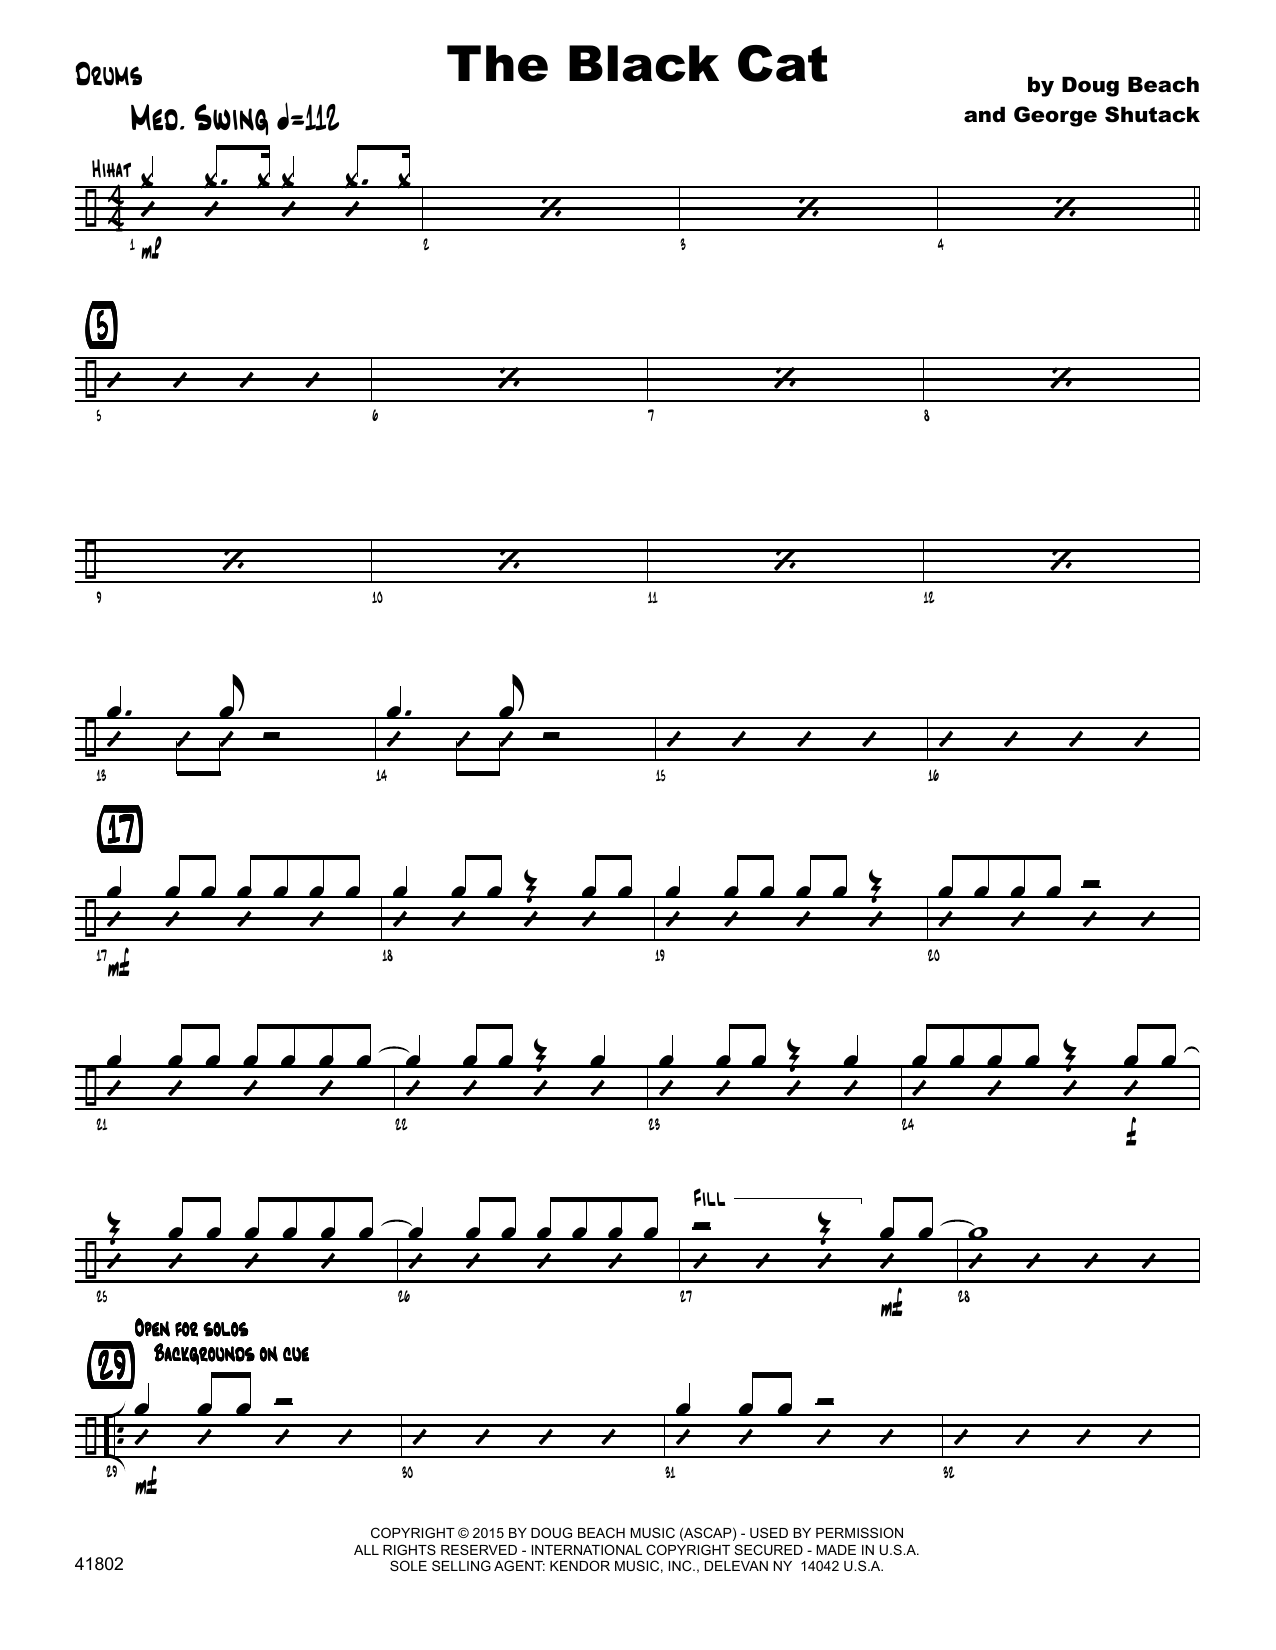 Download George Shutack The Black Cat - Drum Set Sheet Music